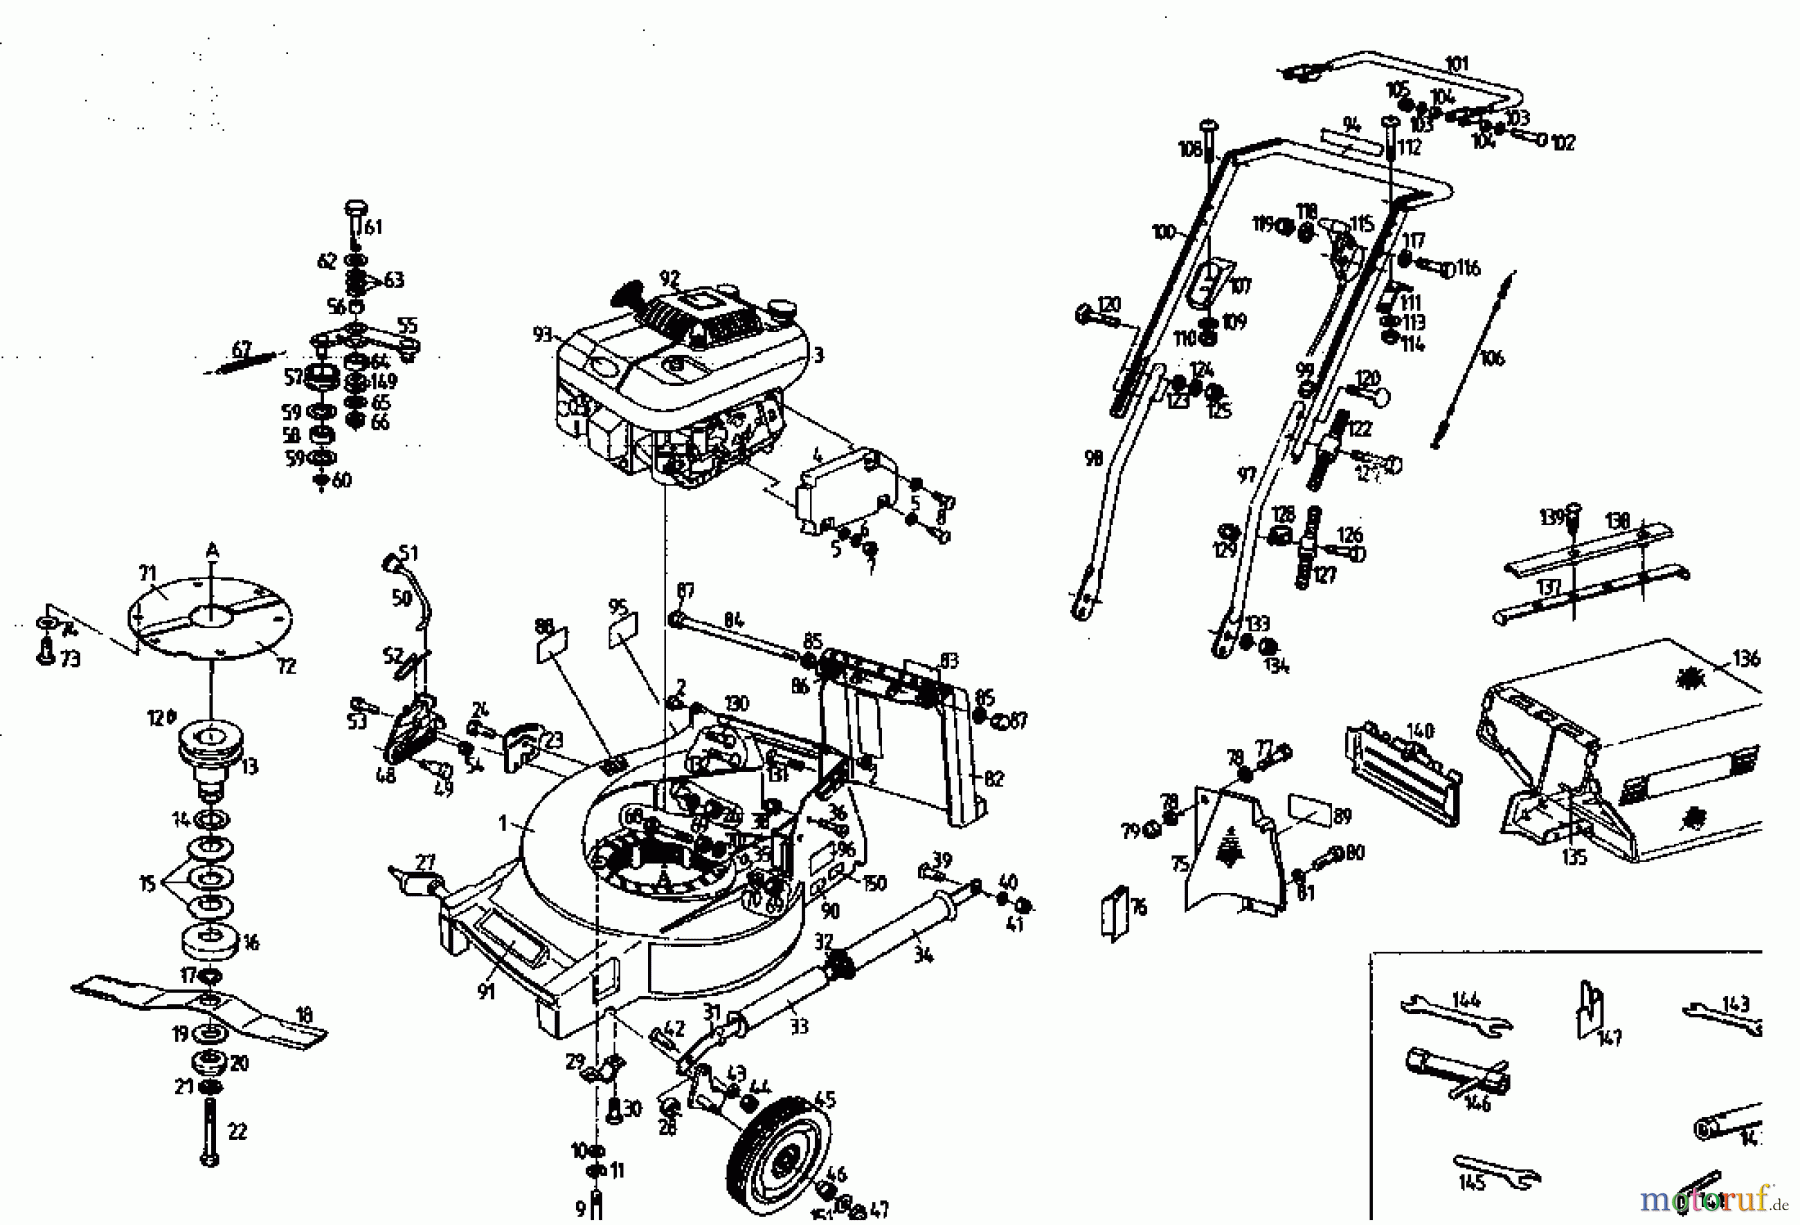  Gutbrod Petrol mower self propelled MH 534 PR 04017.03  (1994) Basic machine